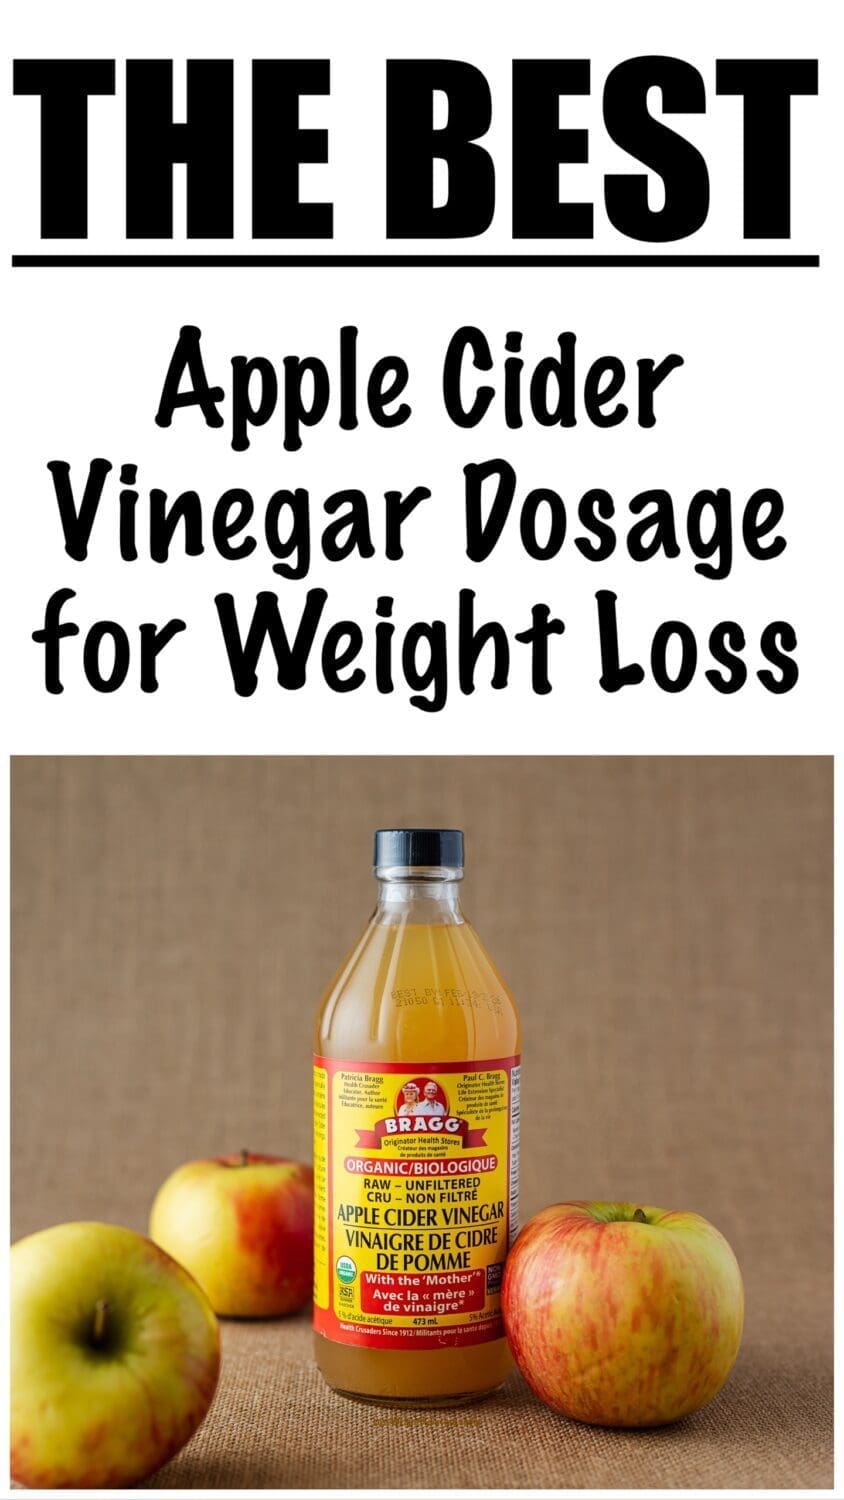 Apple Cider Vinegar Dosage for Weight Loss